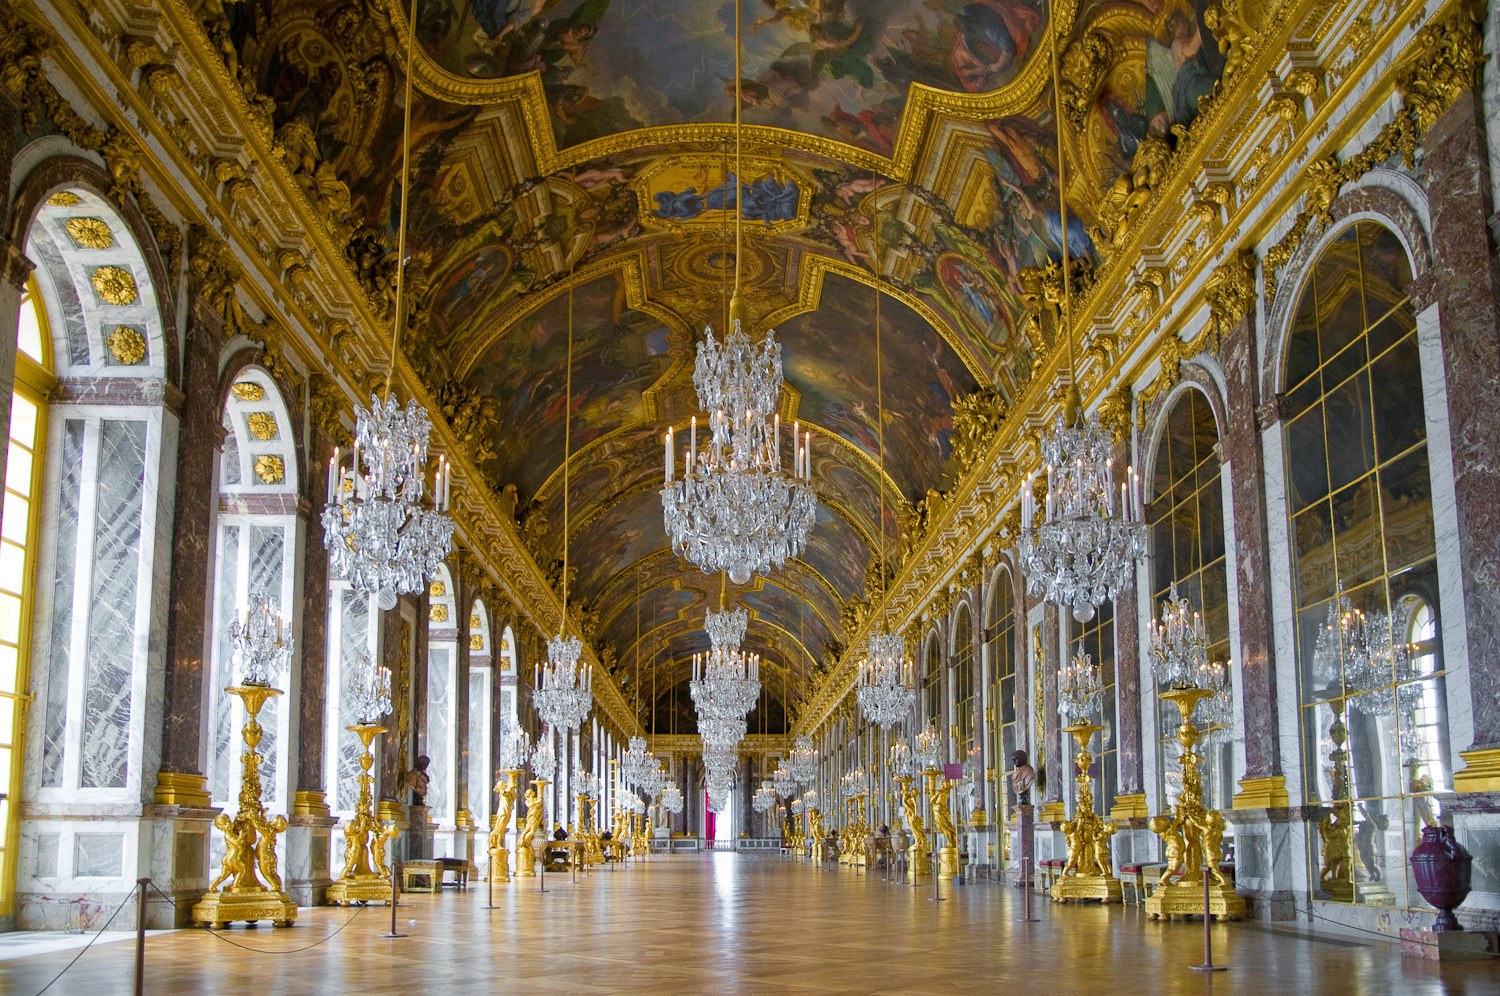 Chateau versailles. Версальский дворец, Версаль дворец Версаля. Дворец Версаль Барокко. Версальский дворец Версаль стиль Барокко. Версаль Франция Барокко.